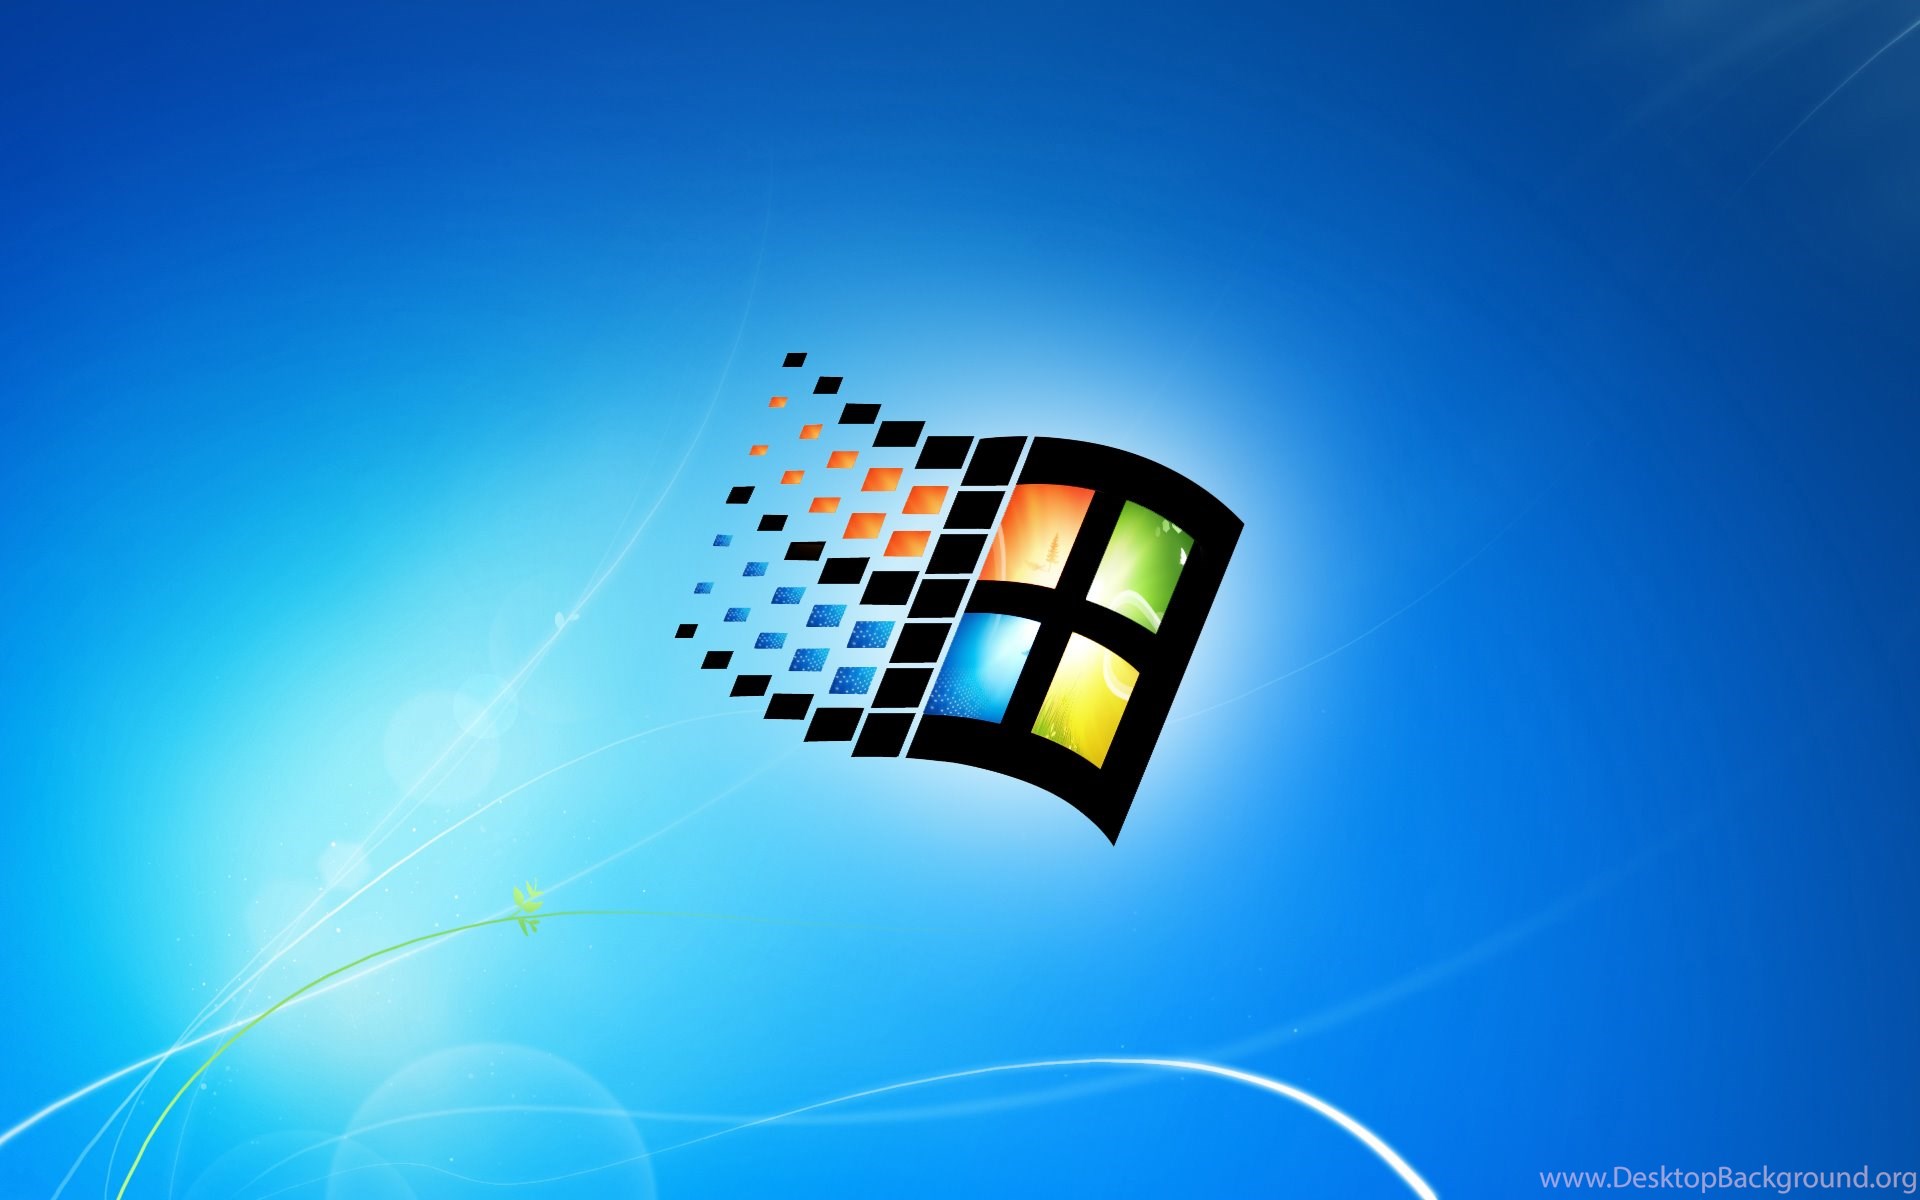 Windows 7 Default Wallpaper Desktop Background